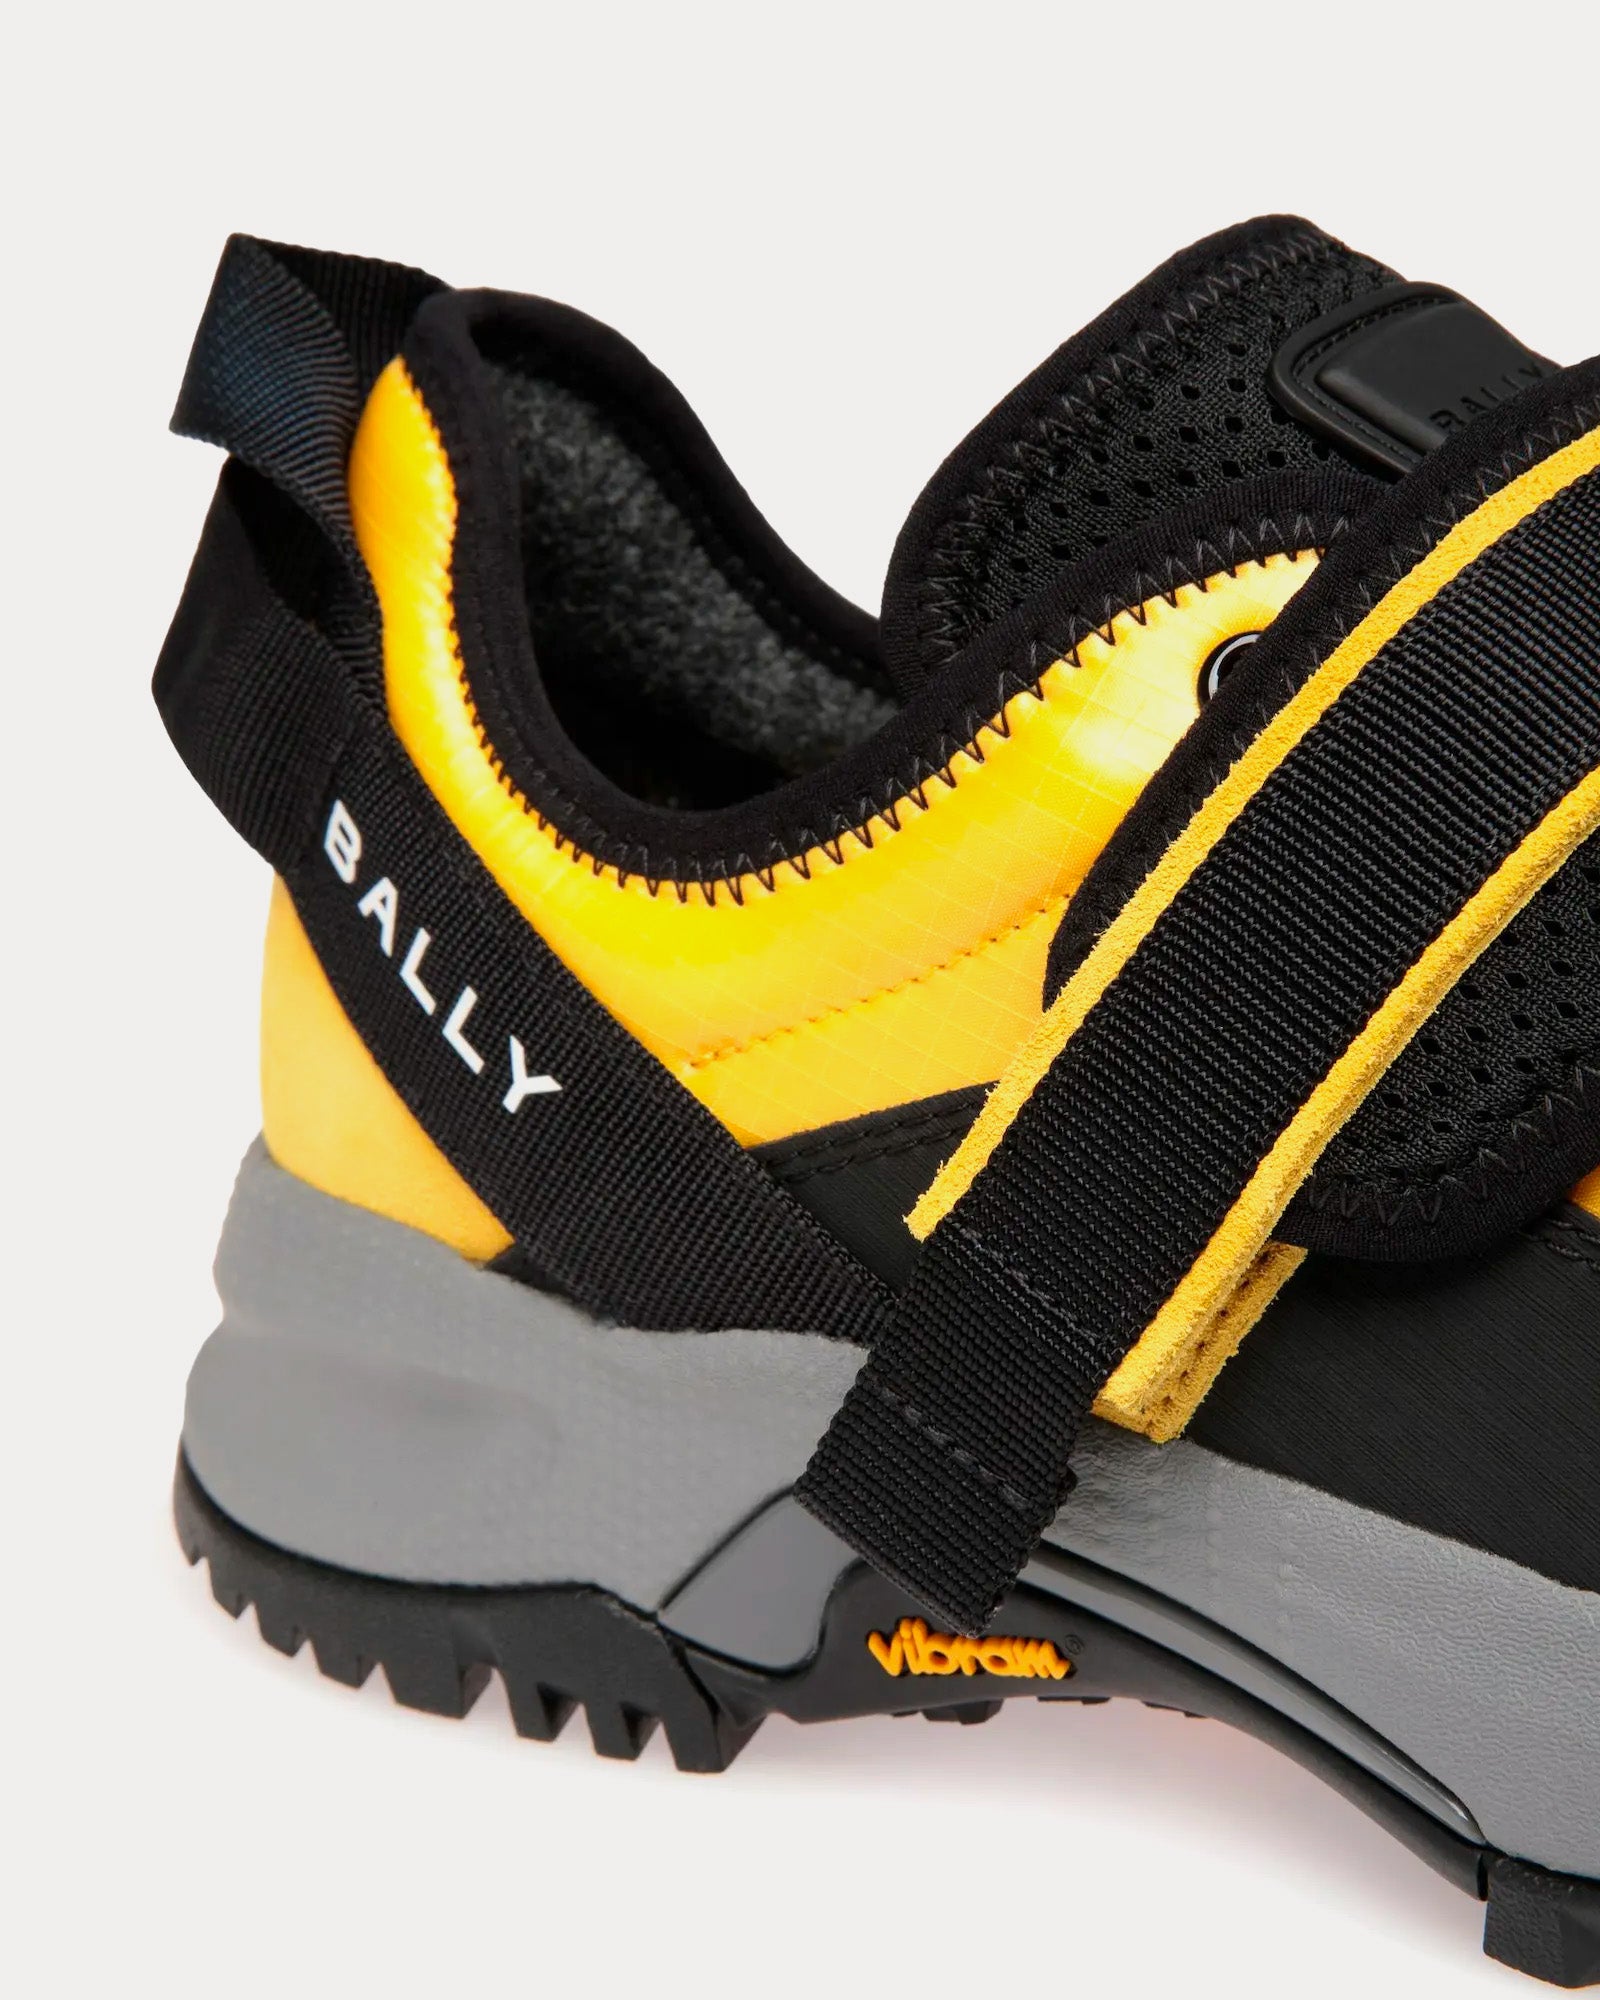 Bally - Fast Nylon Yellow / Black Low Top Sneakers